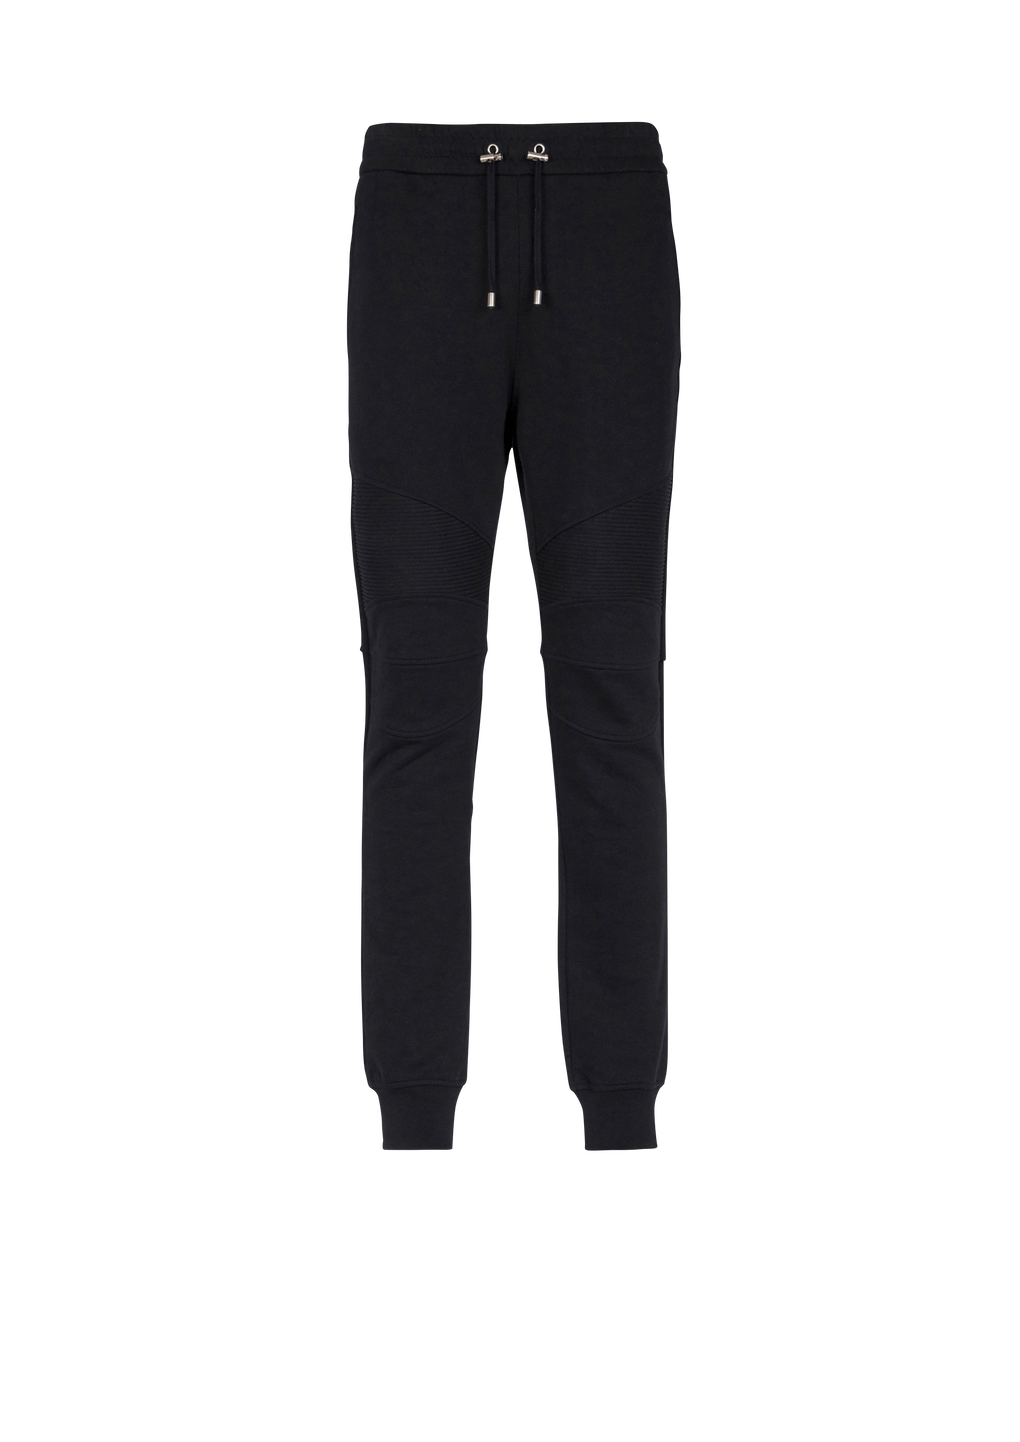 Cotton sweatpants with Balmain Paris logo, black, hi-res